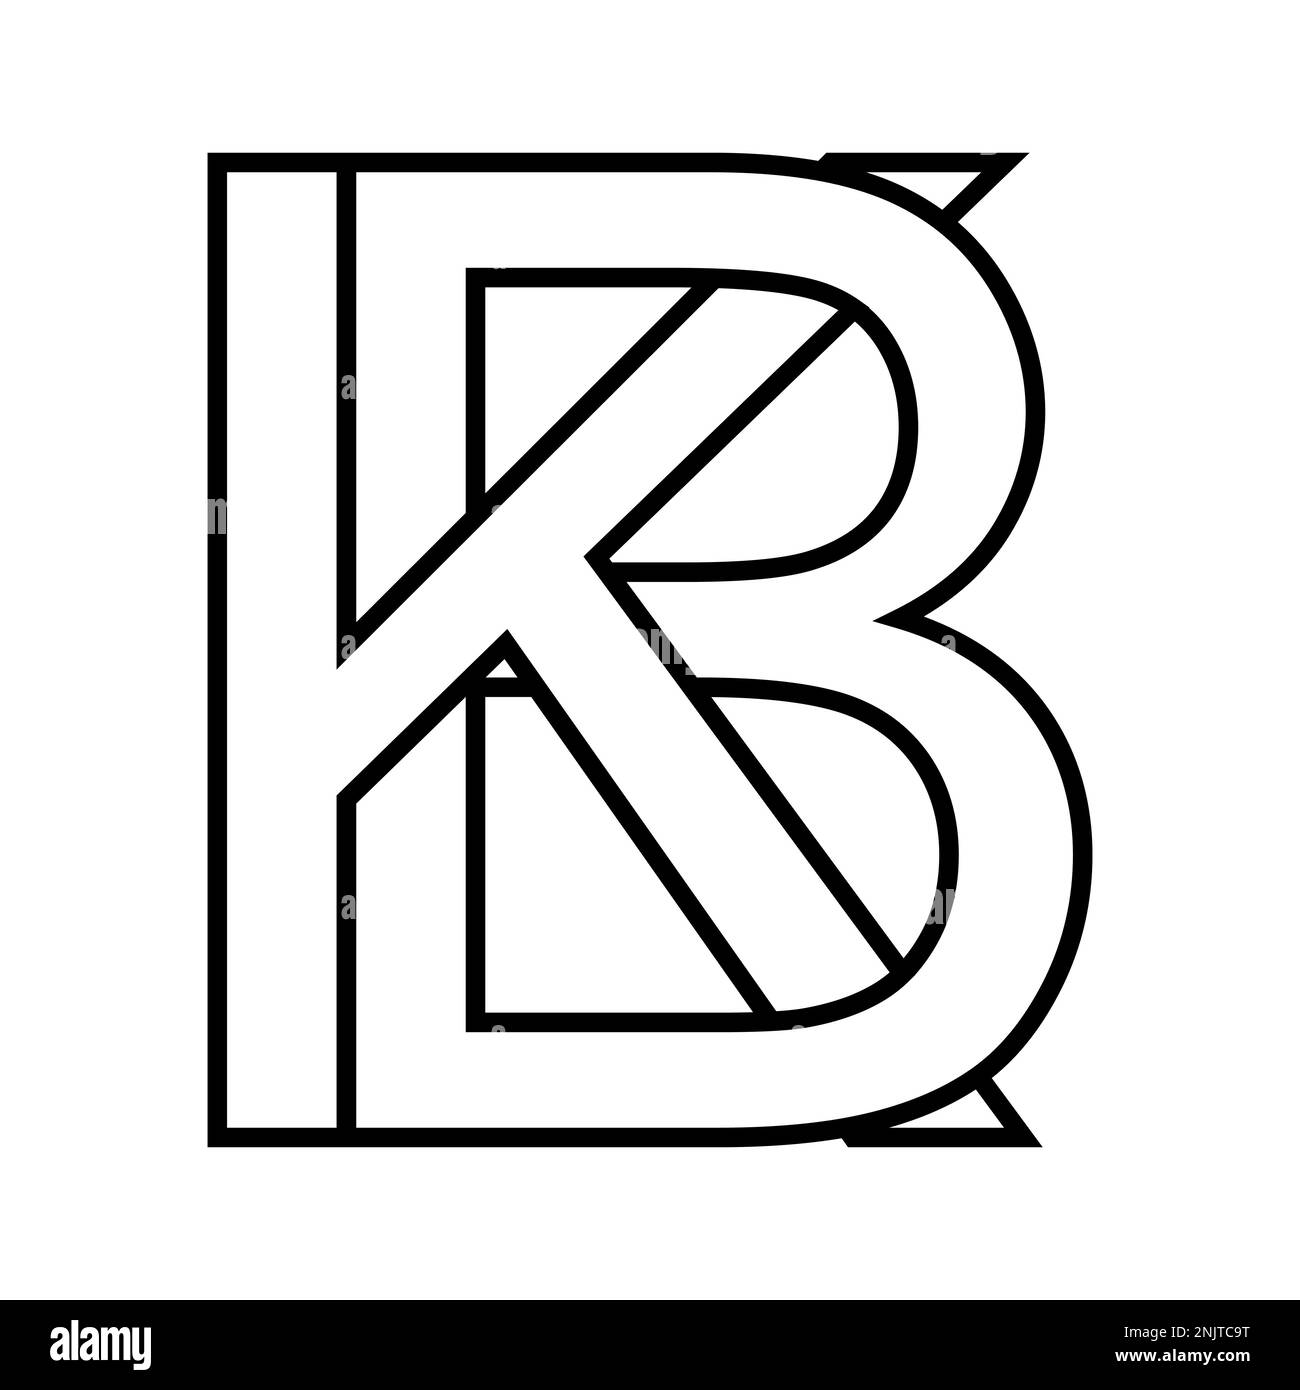 Logo sign kb bk icon double letters logotype b k Stock Vector